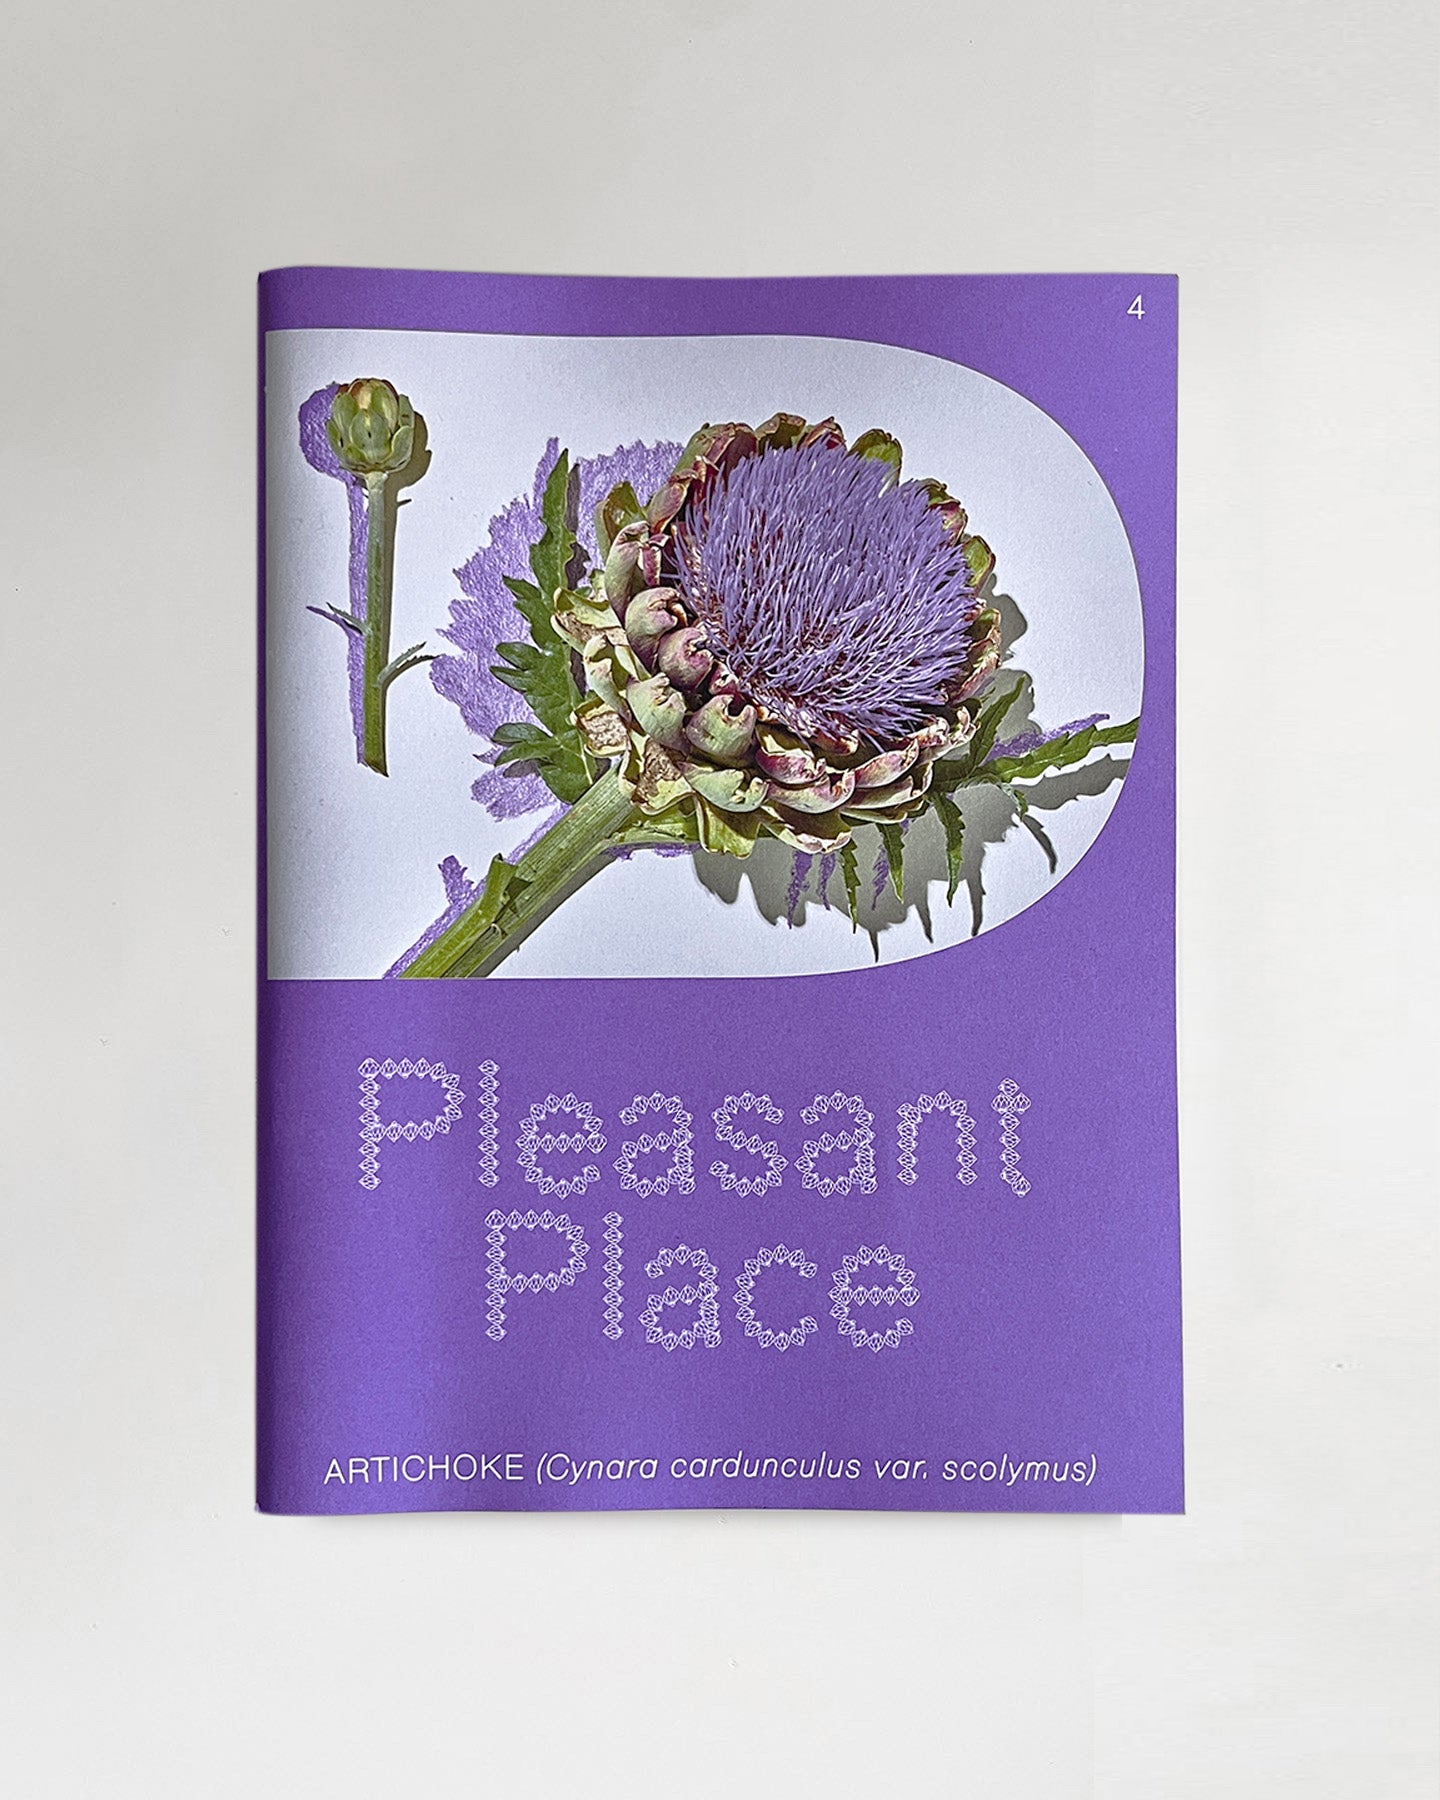 Pleasant Place Issue 4: Artichoke